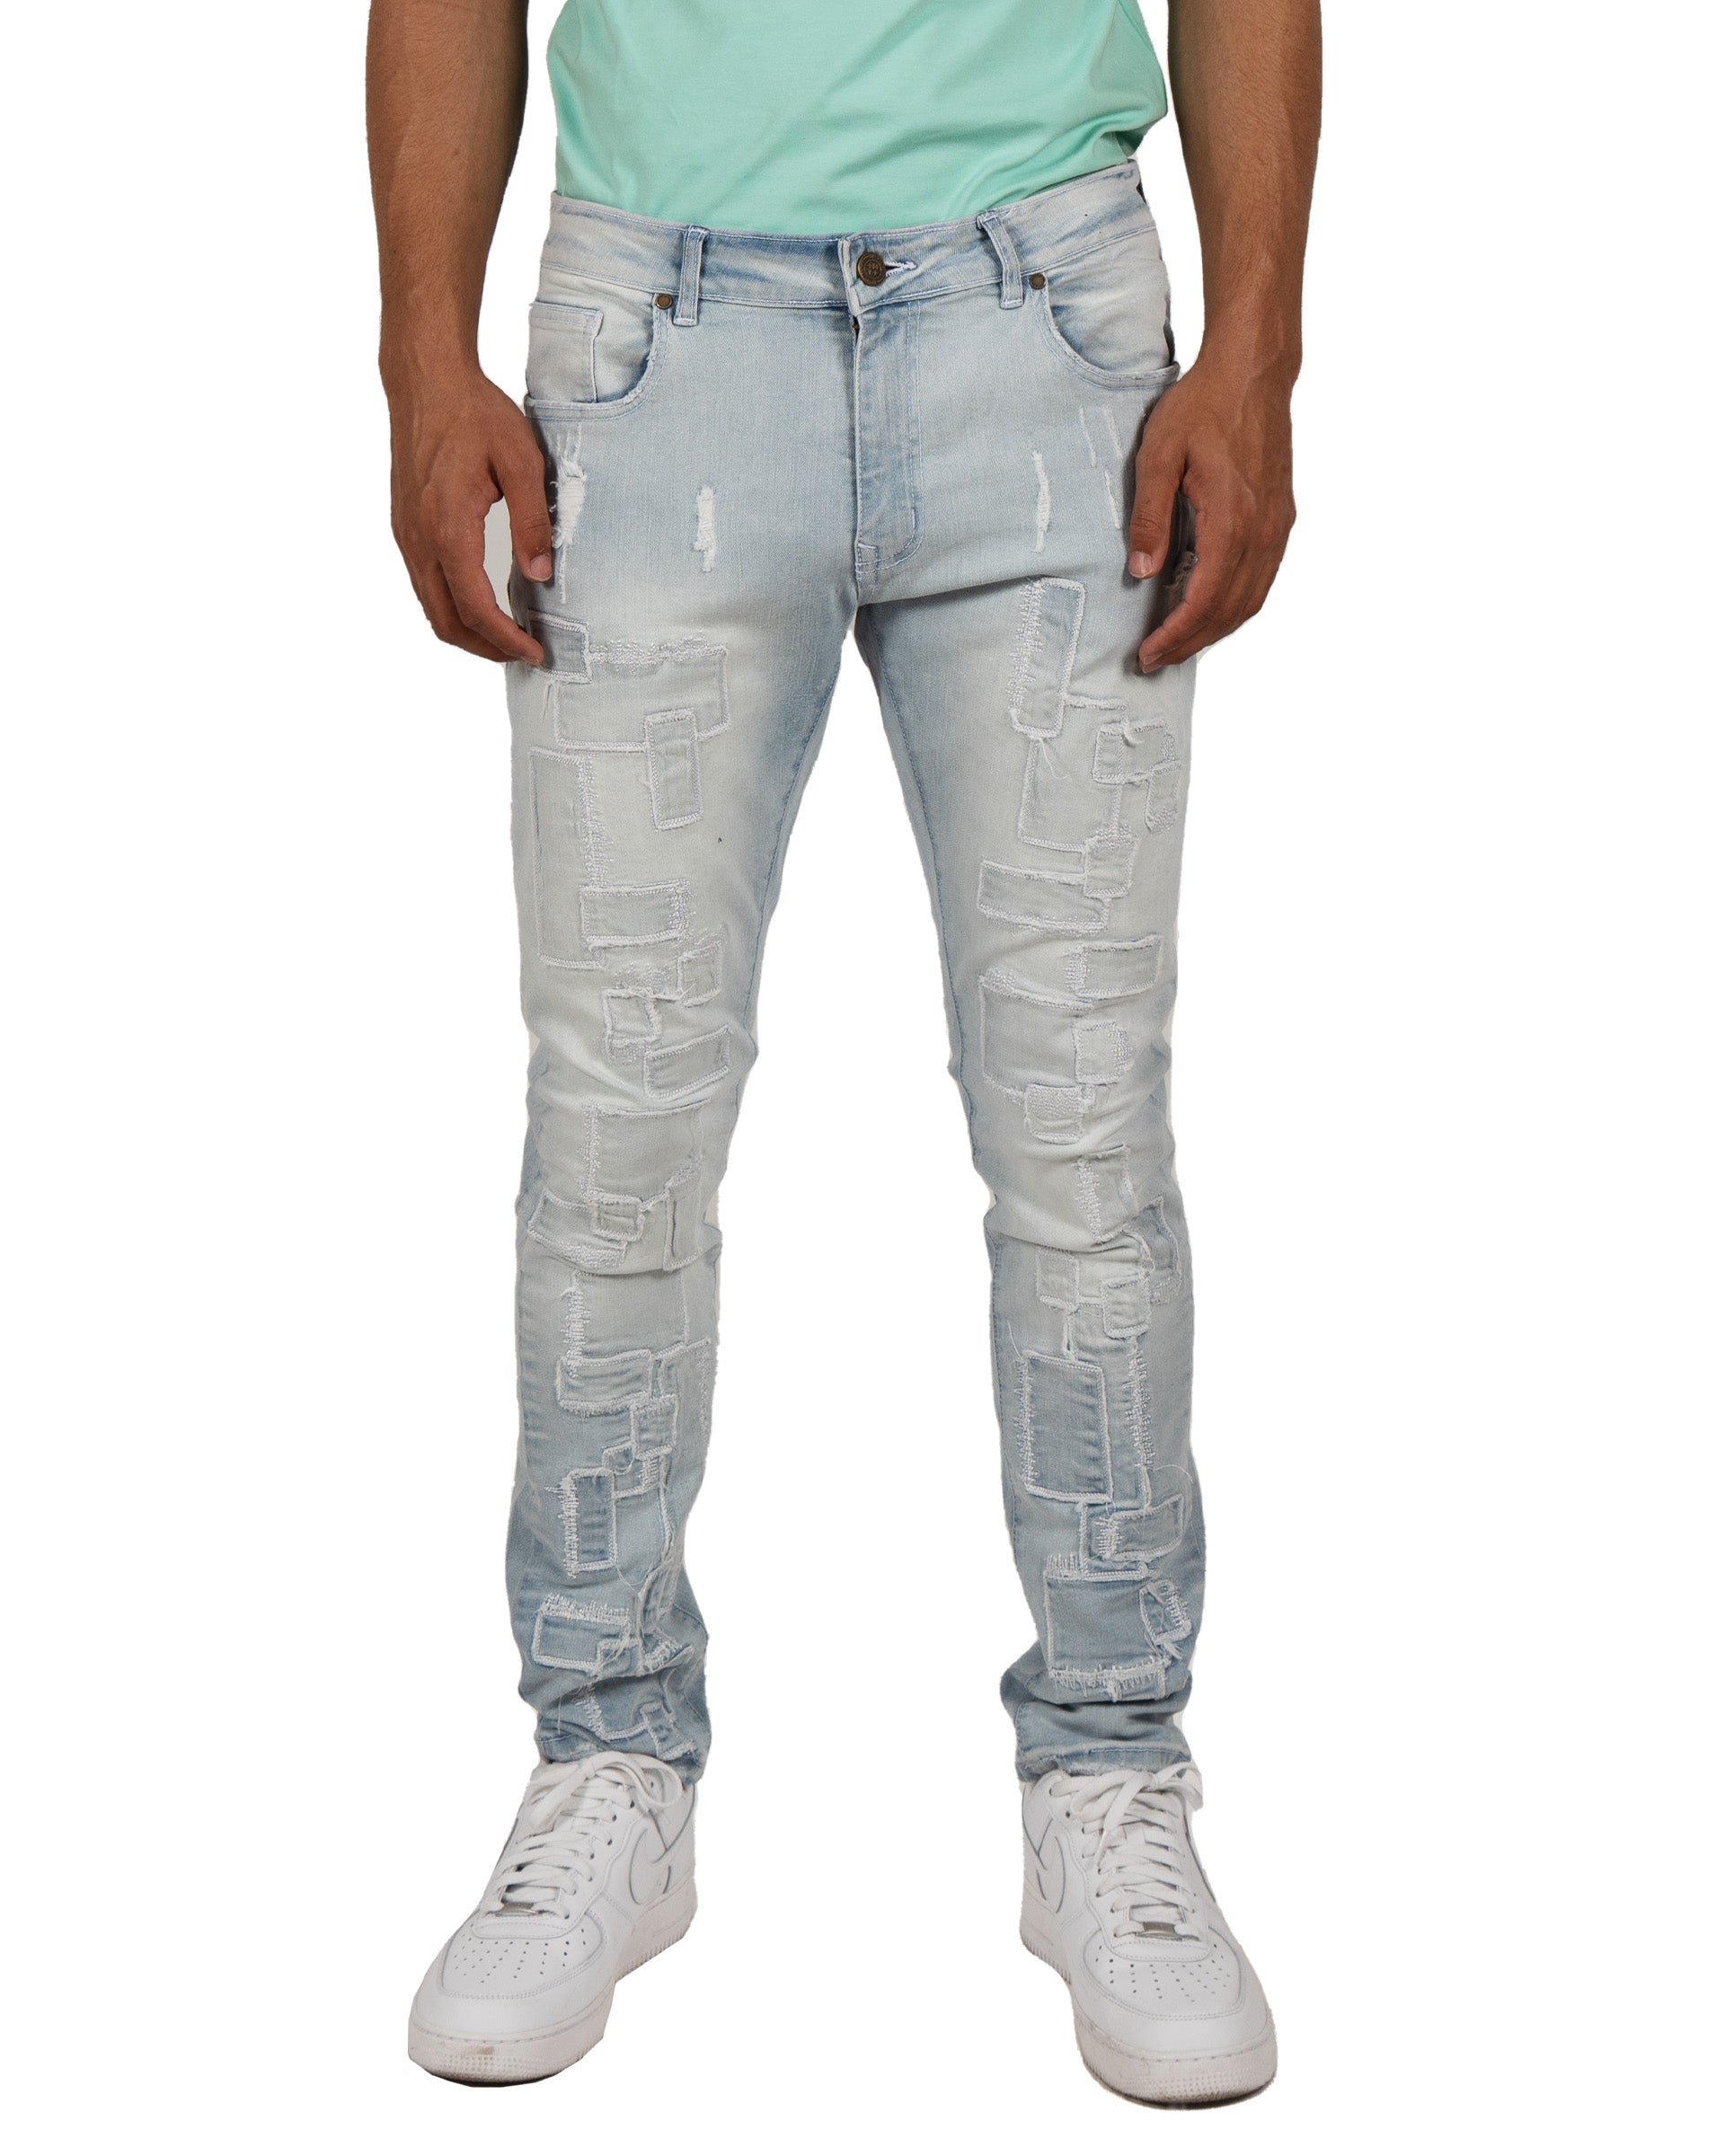 HUMBOLDT | Slim Fit Stitched Denim Jeans in Light Wash